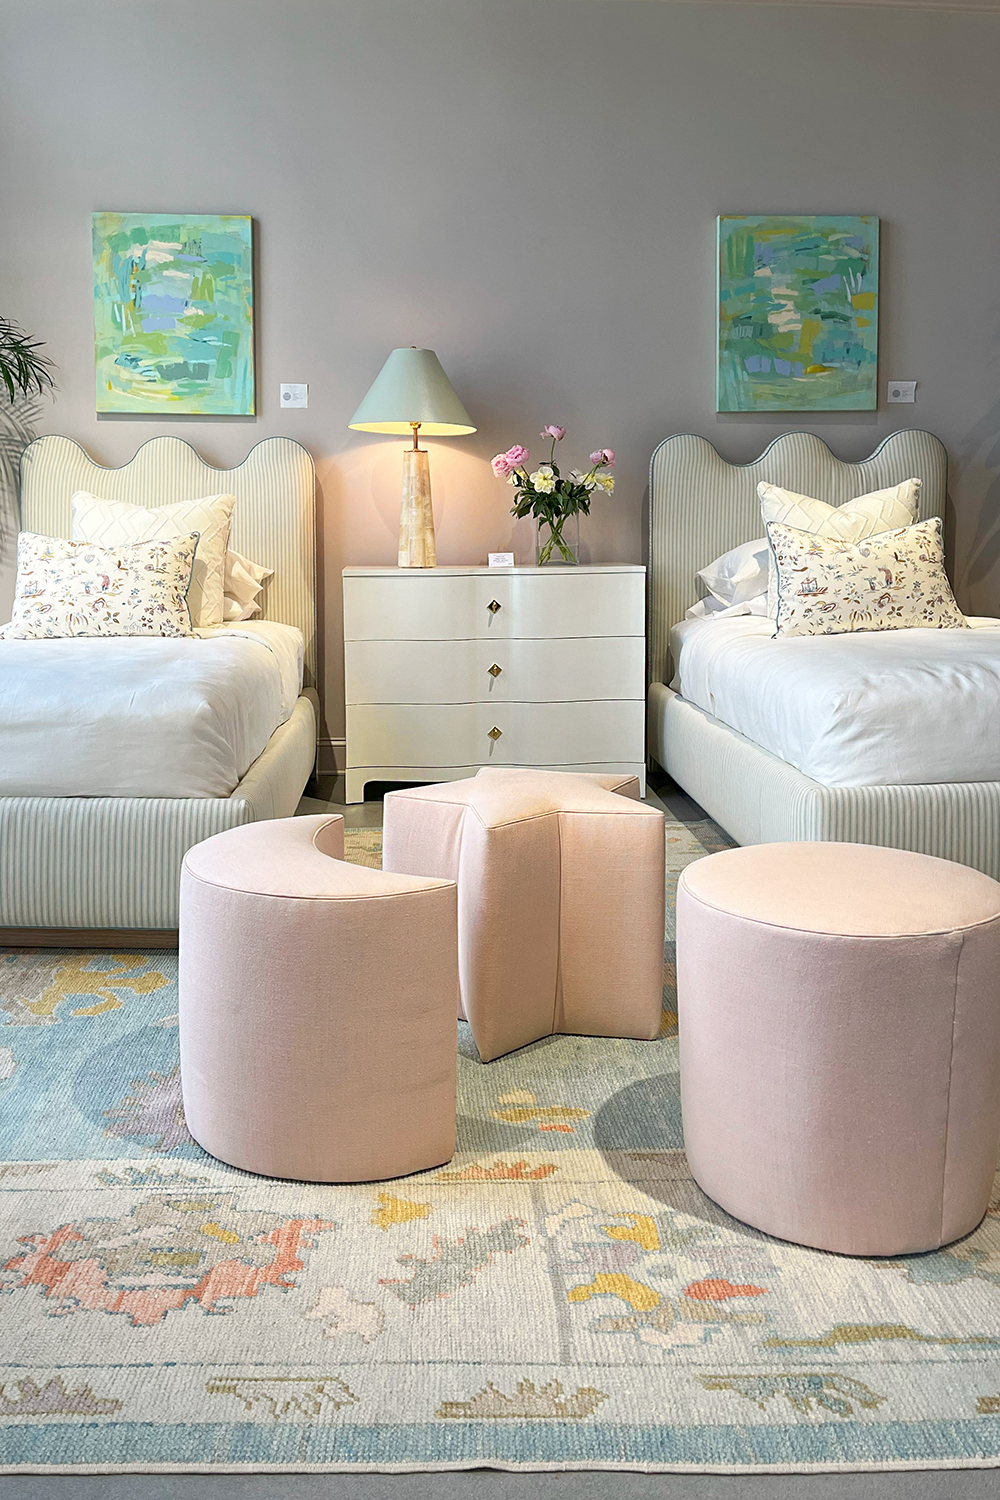 Girls bedroom furniture - Sherrill brand furniture at High Point Market